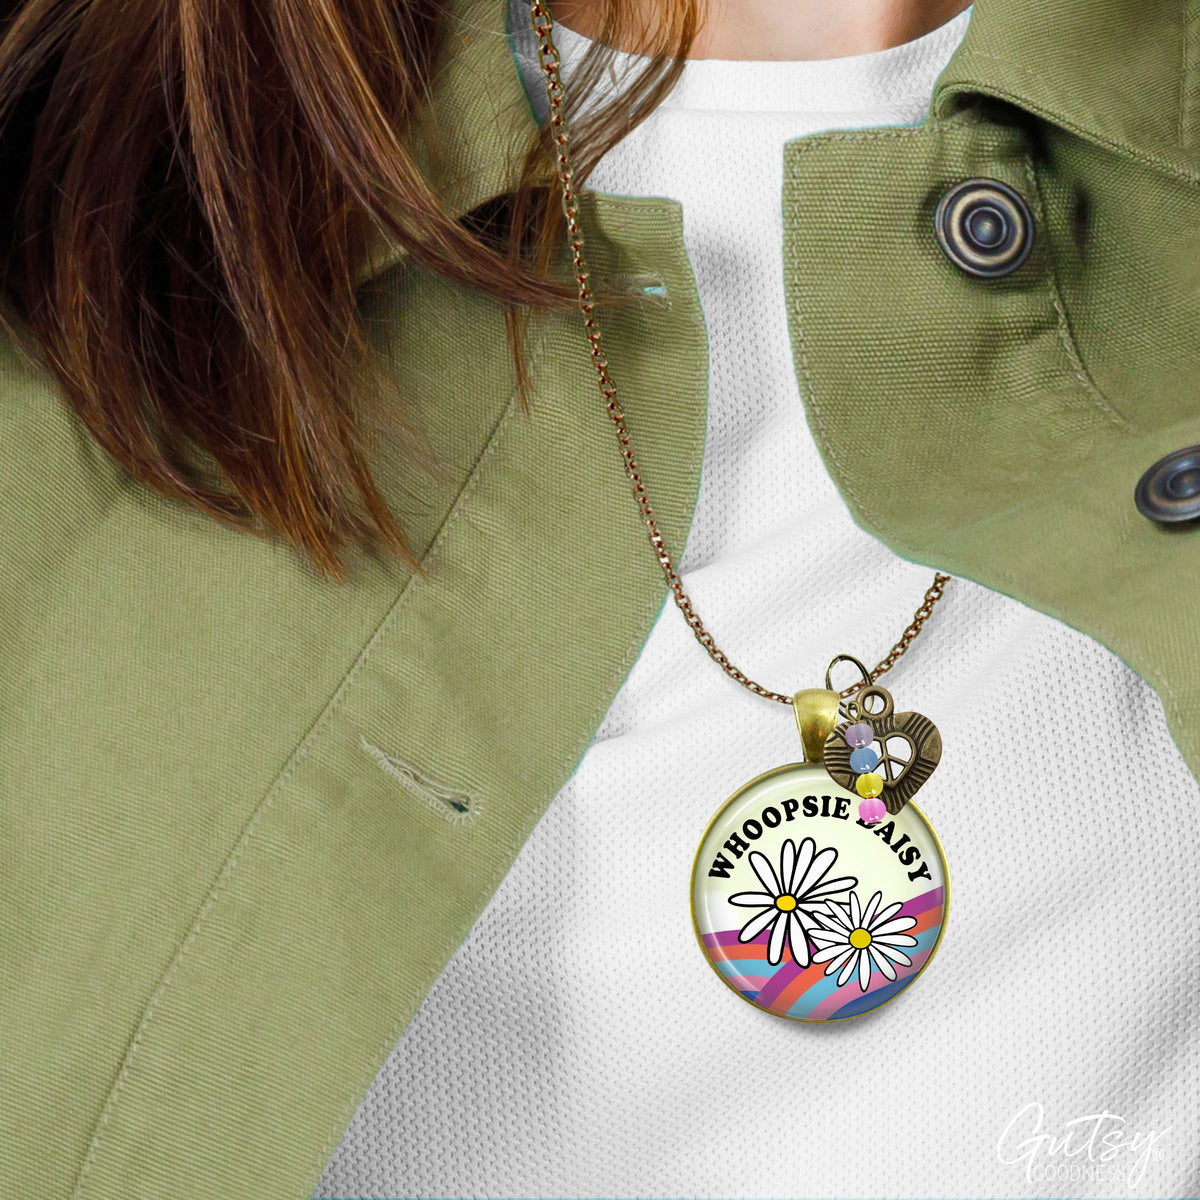 Handmade Gutsy Goodness Jewelry Whoopsie Daisy Boho Hippie Style Necklace Rainbow Pendant Jewelry Heart Peace Symbol Charm & Card